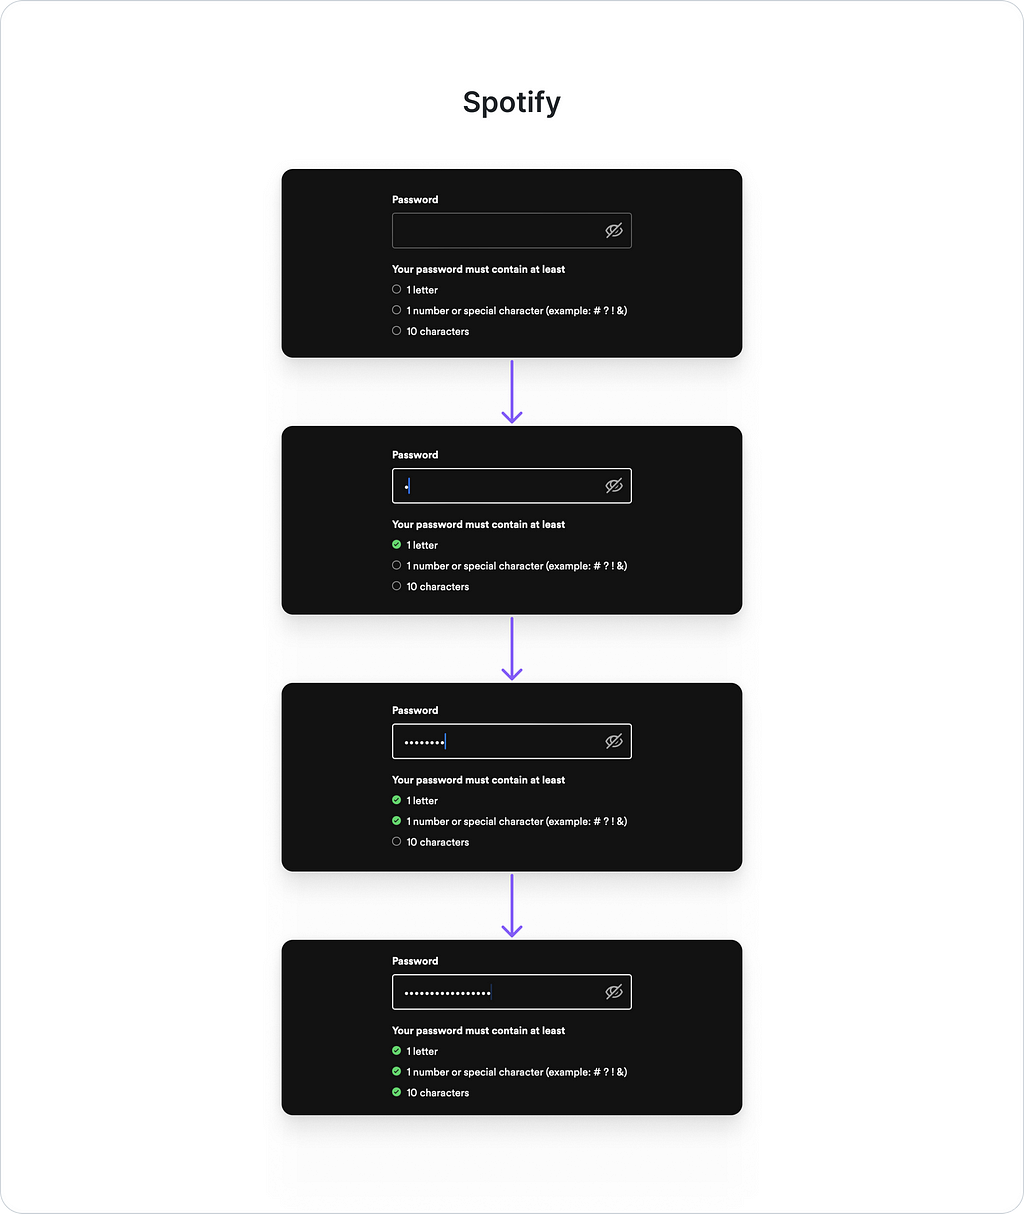 Spotify’s password field.